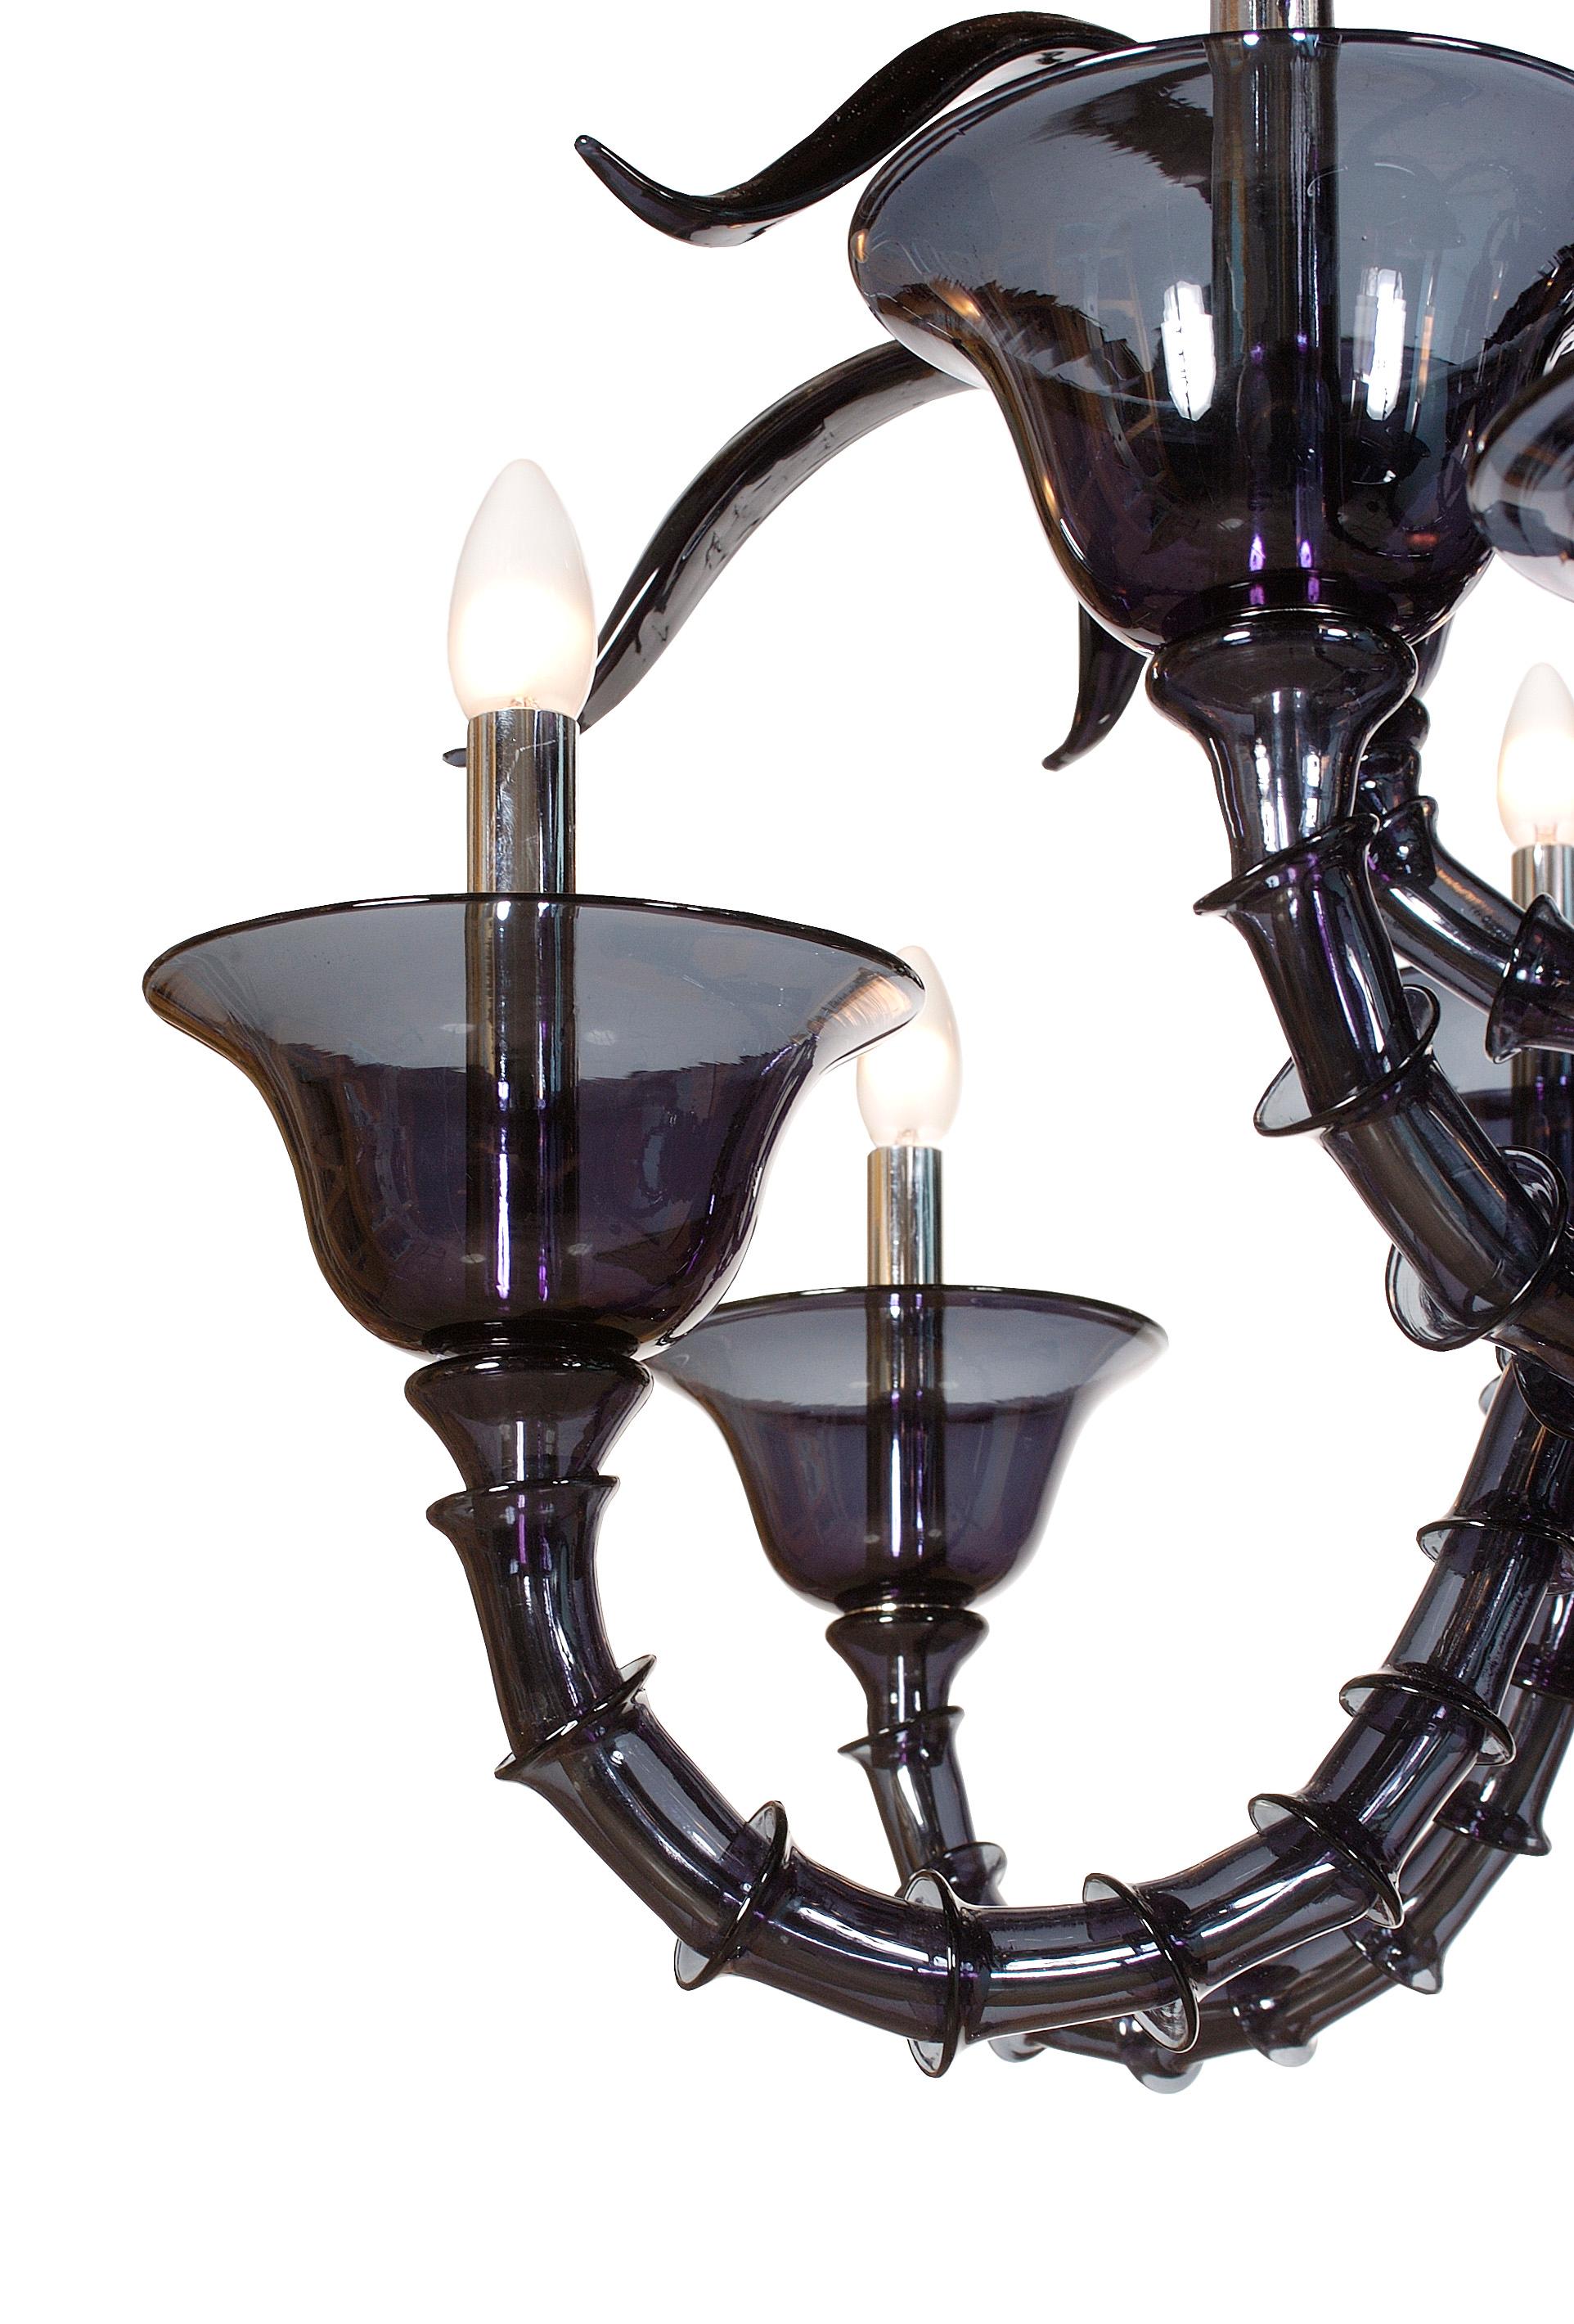 Italian Artistic Handmade Design Ca' Rezzonico New York Murano Glass Chandelier For Sale